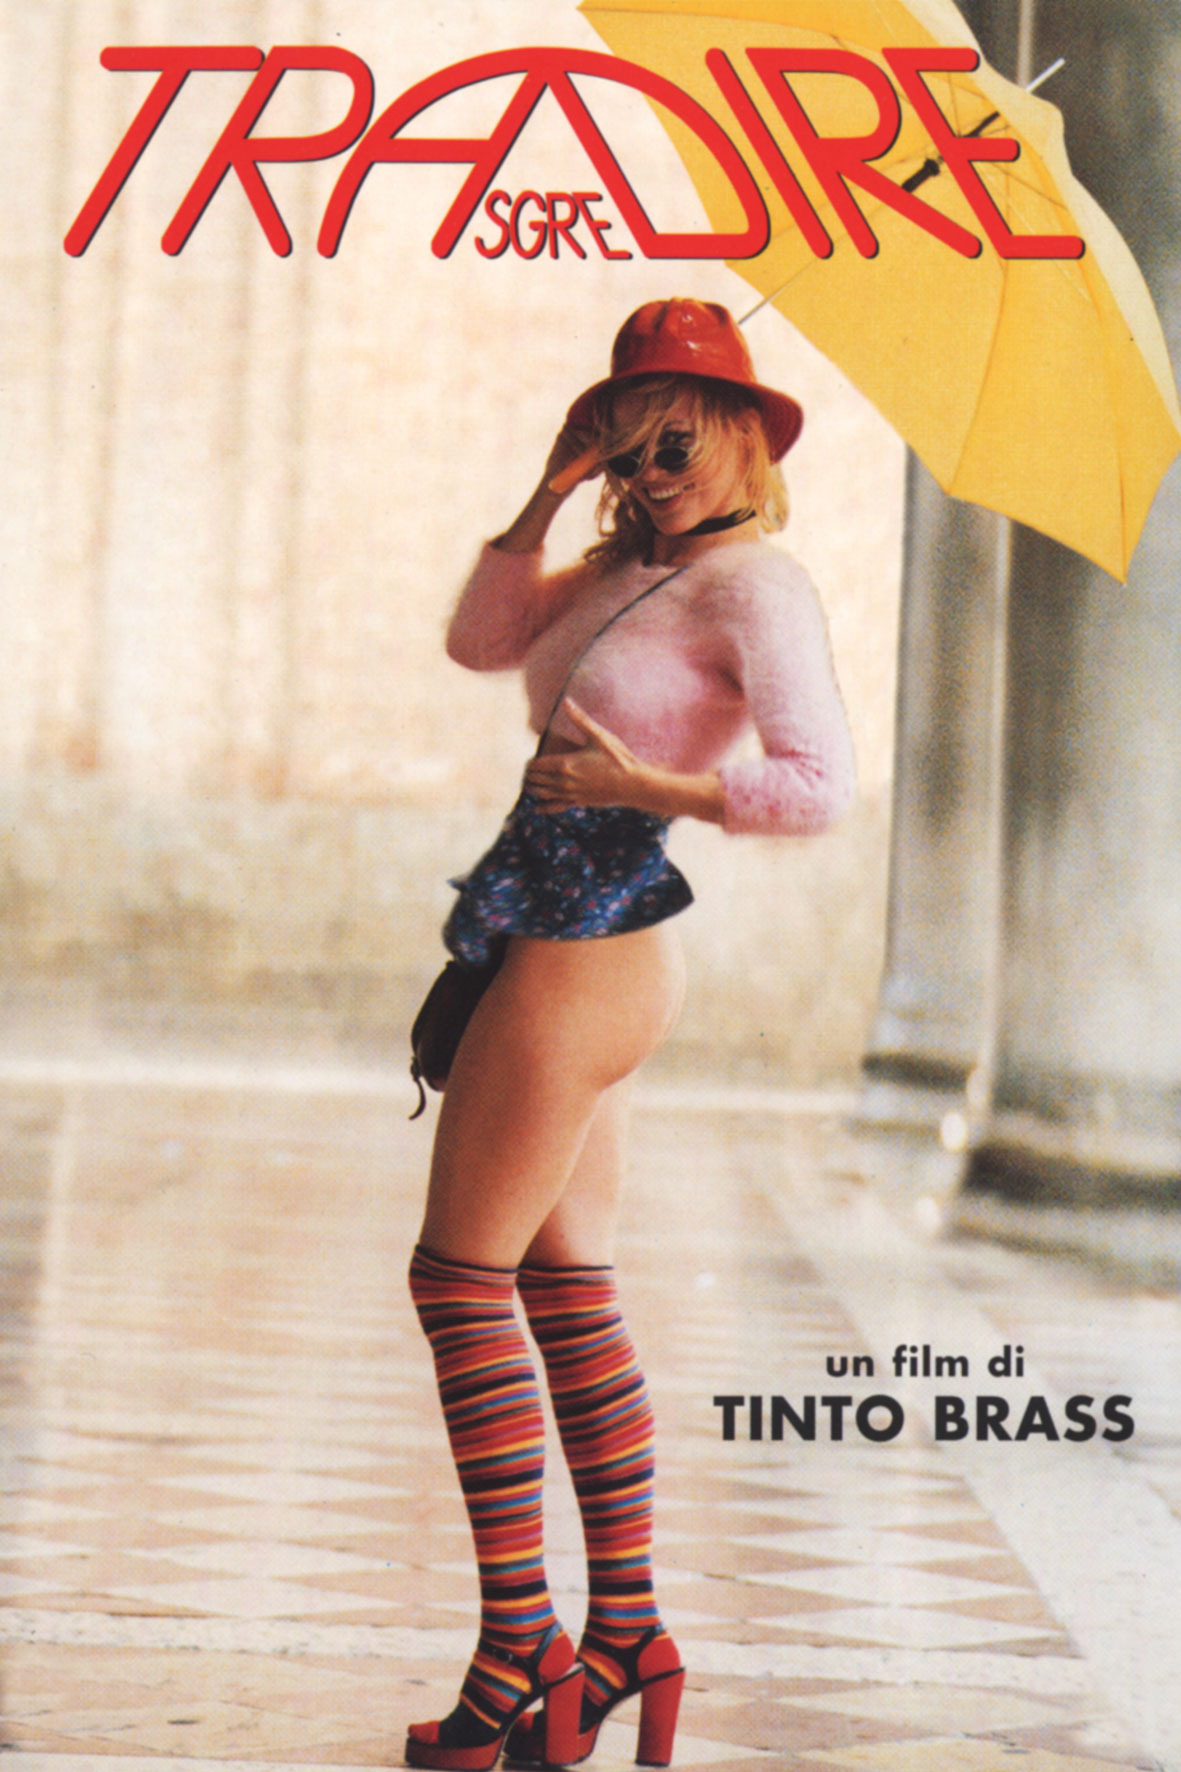 Best of Tinto brass full movie